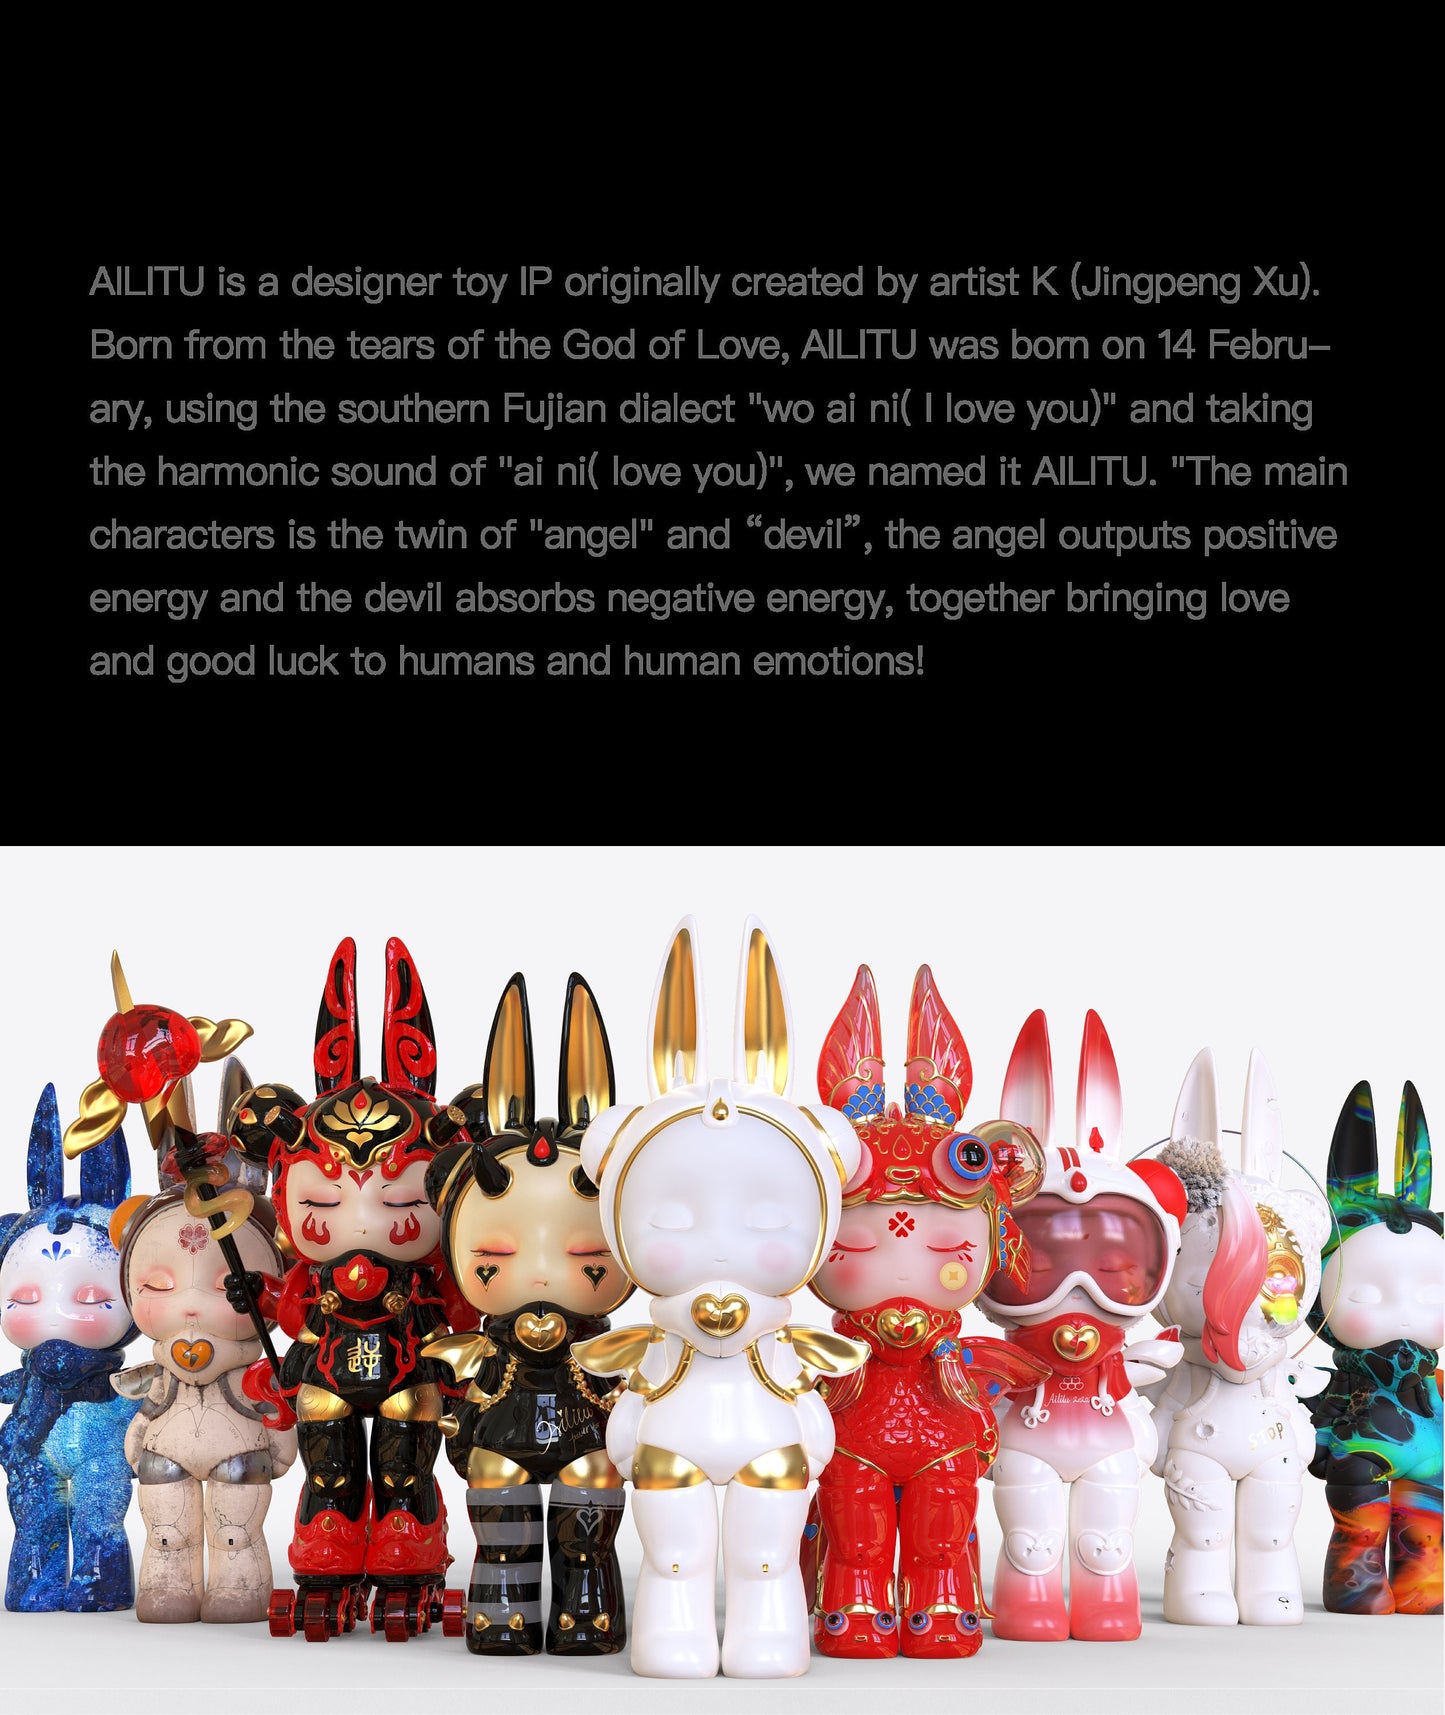 Art Designer Toy Figure/Limited Edition/AILITU - Devil/Material Polyurethane/8.27'' (21 cm) X 3.54'' (9 cm) X 2.76'' (7 cm)